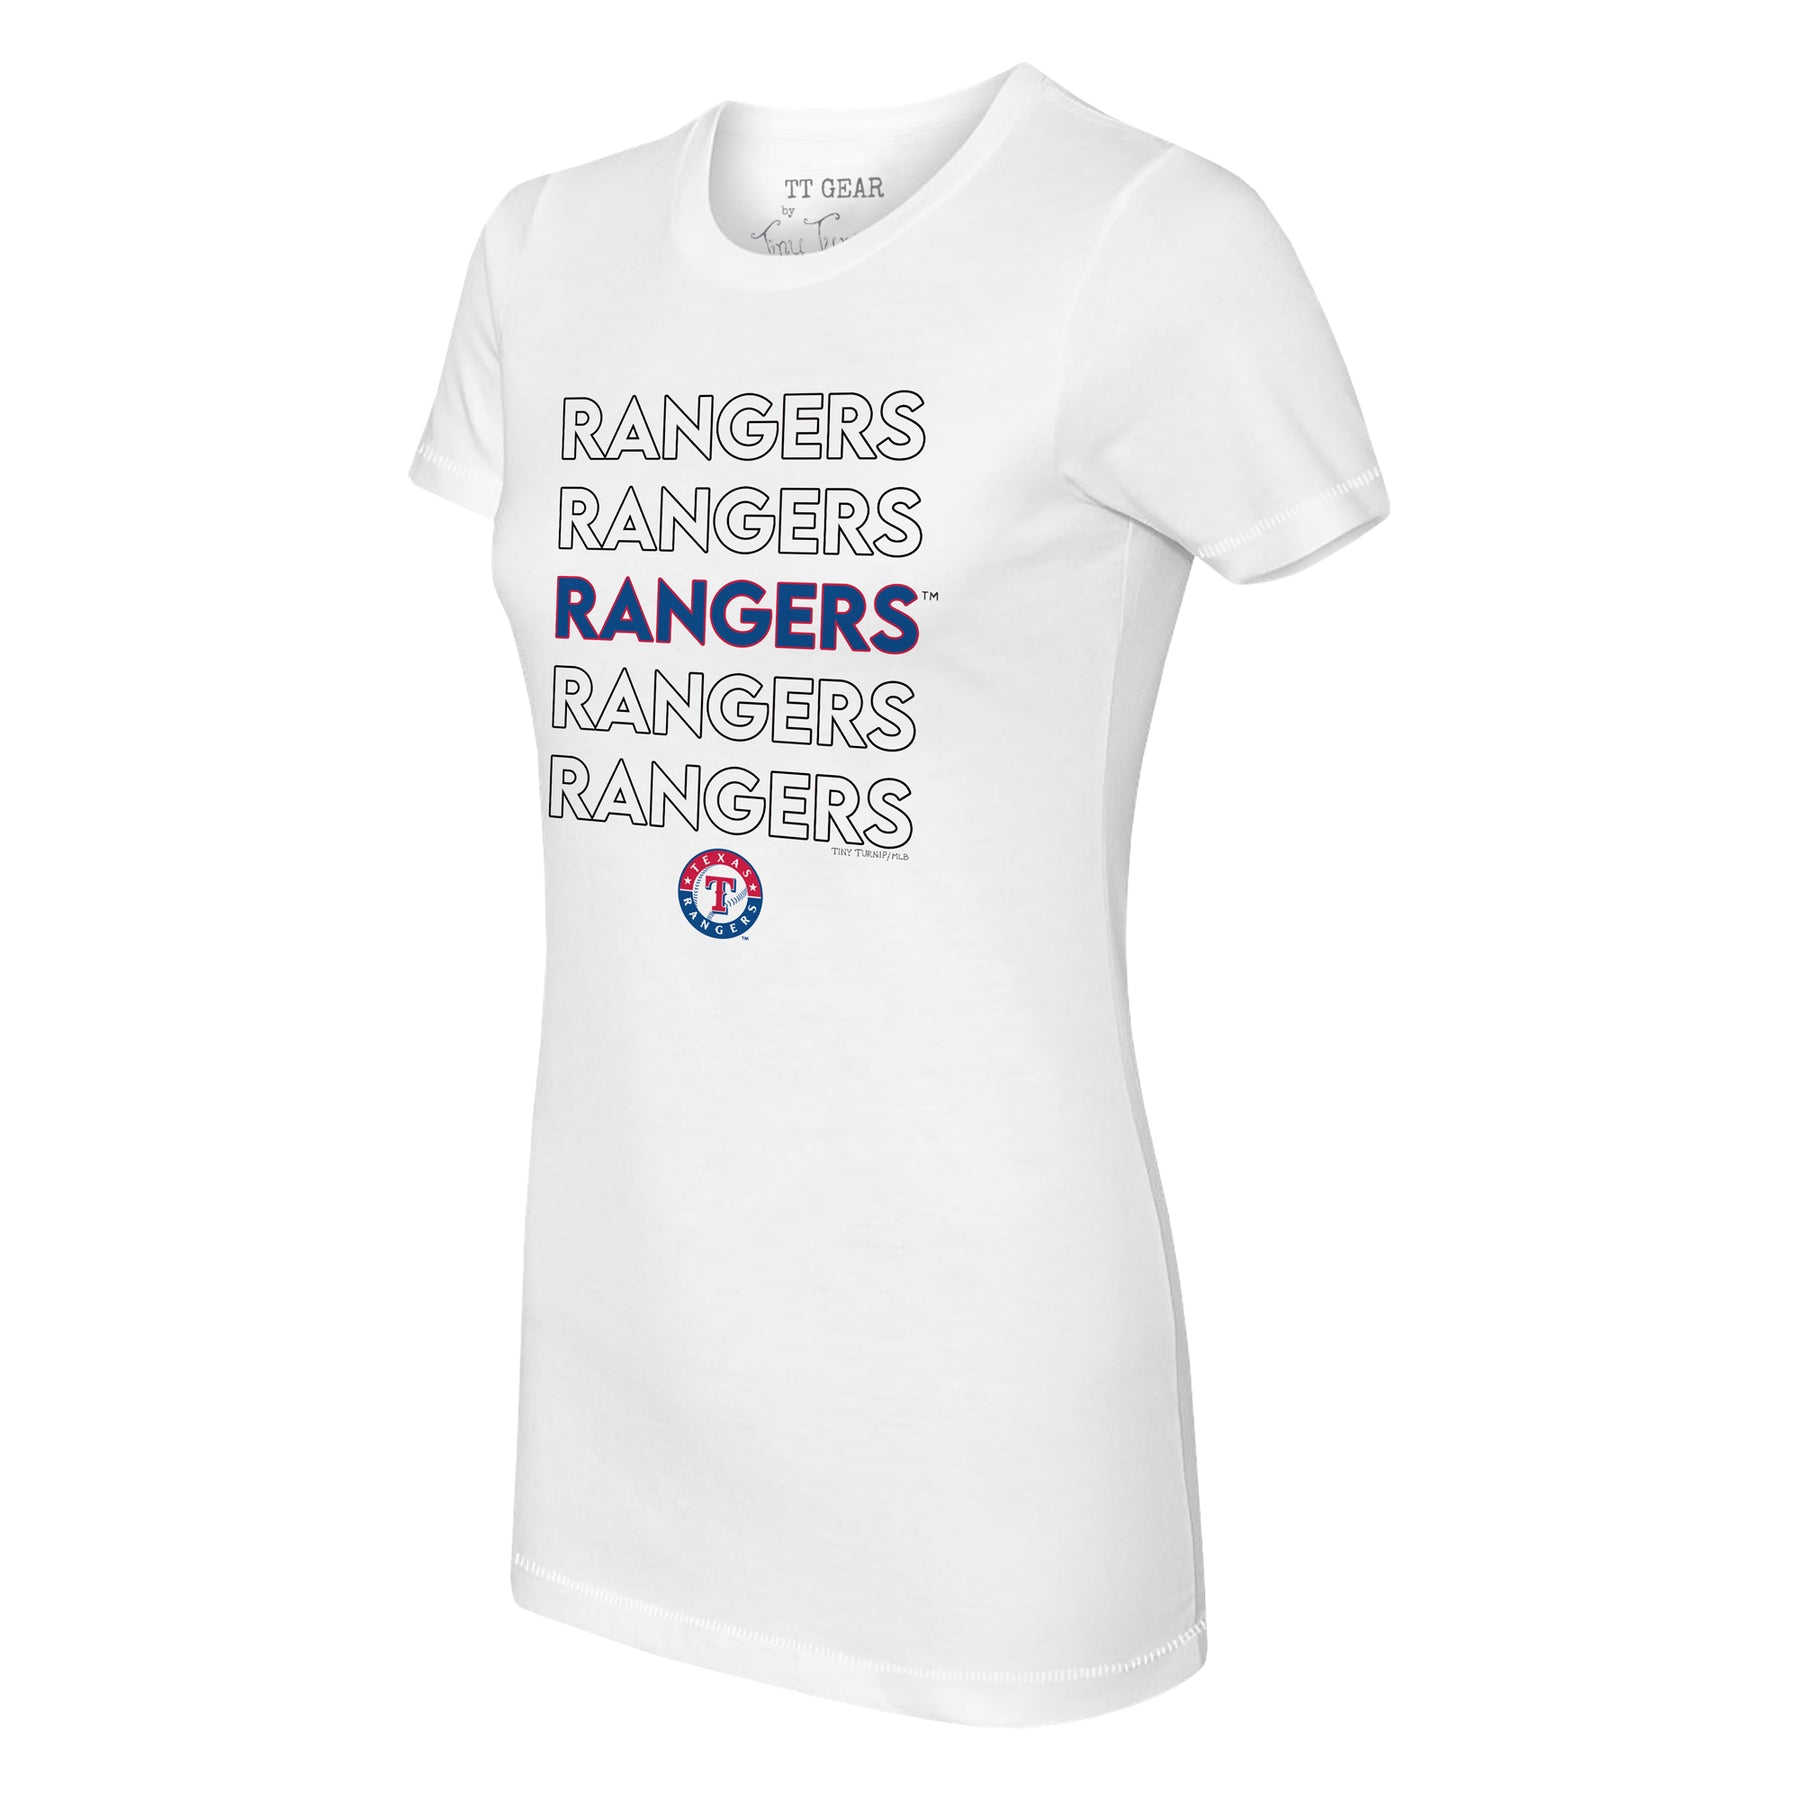 Lids Texas Rangers Tiny Turnip Infant Stacked T-Shirt - White